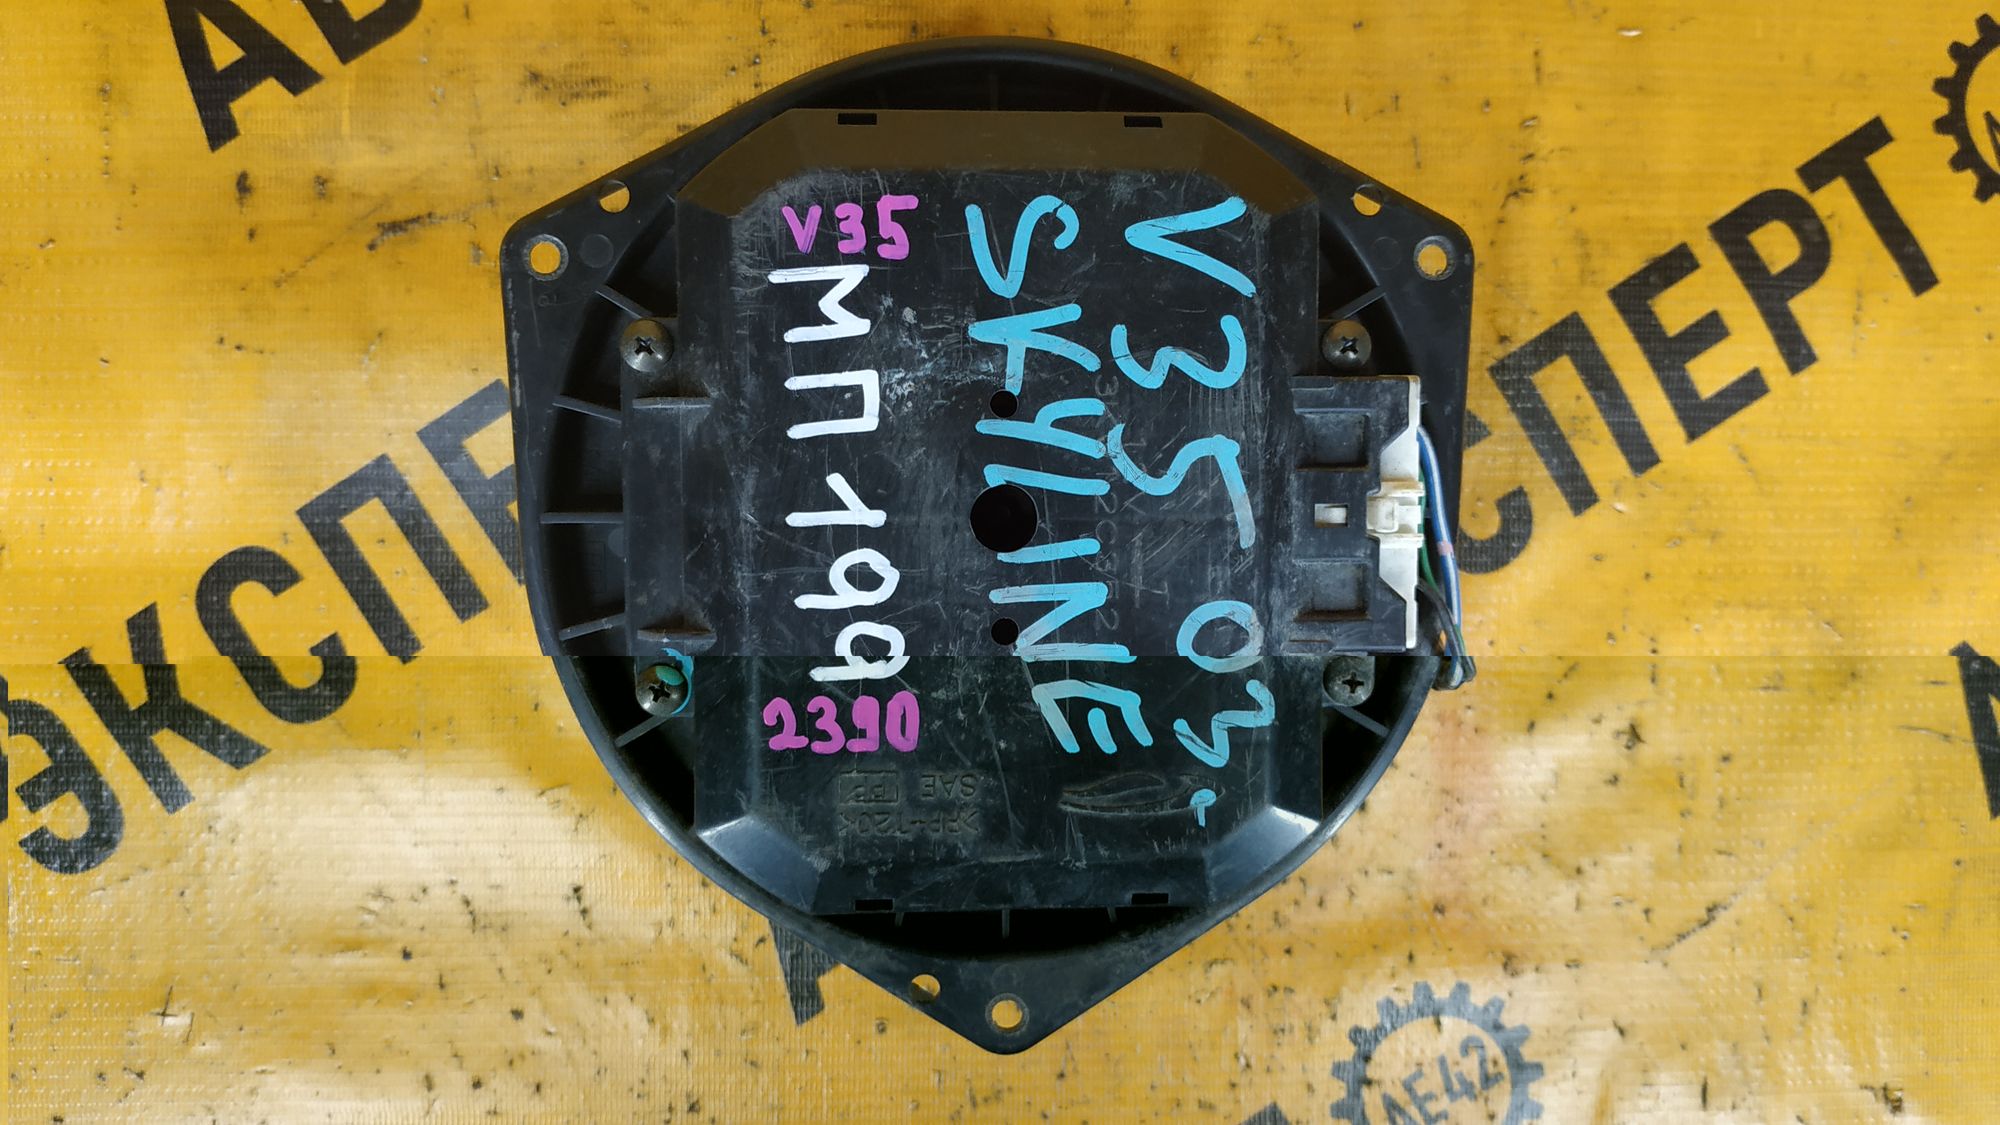 Мотор отопителя Nissan Skyline V35